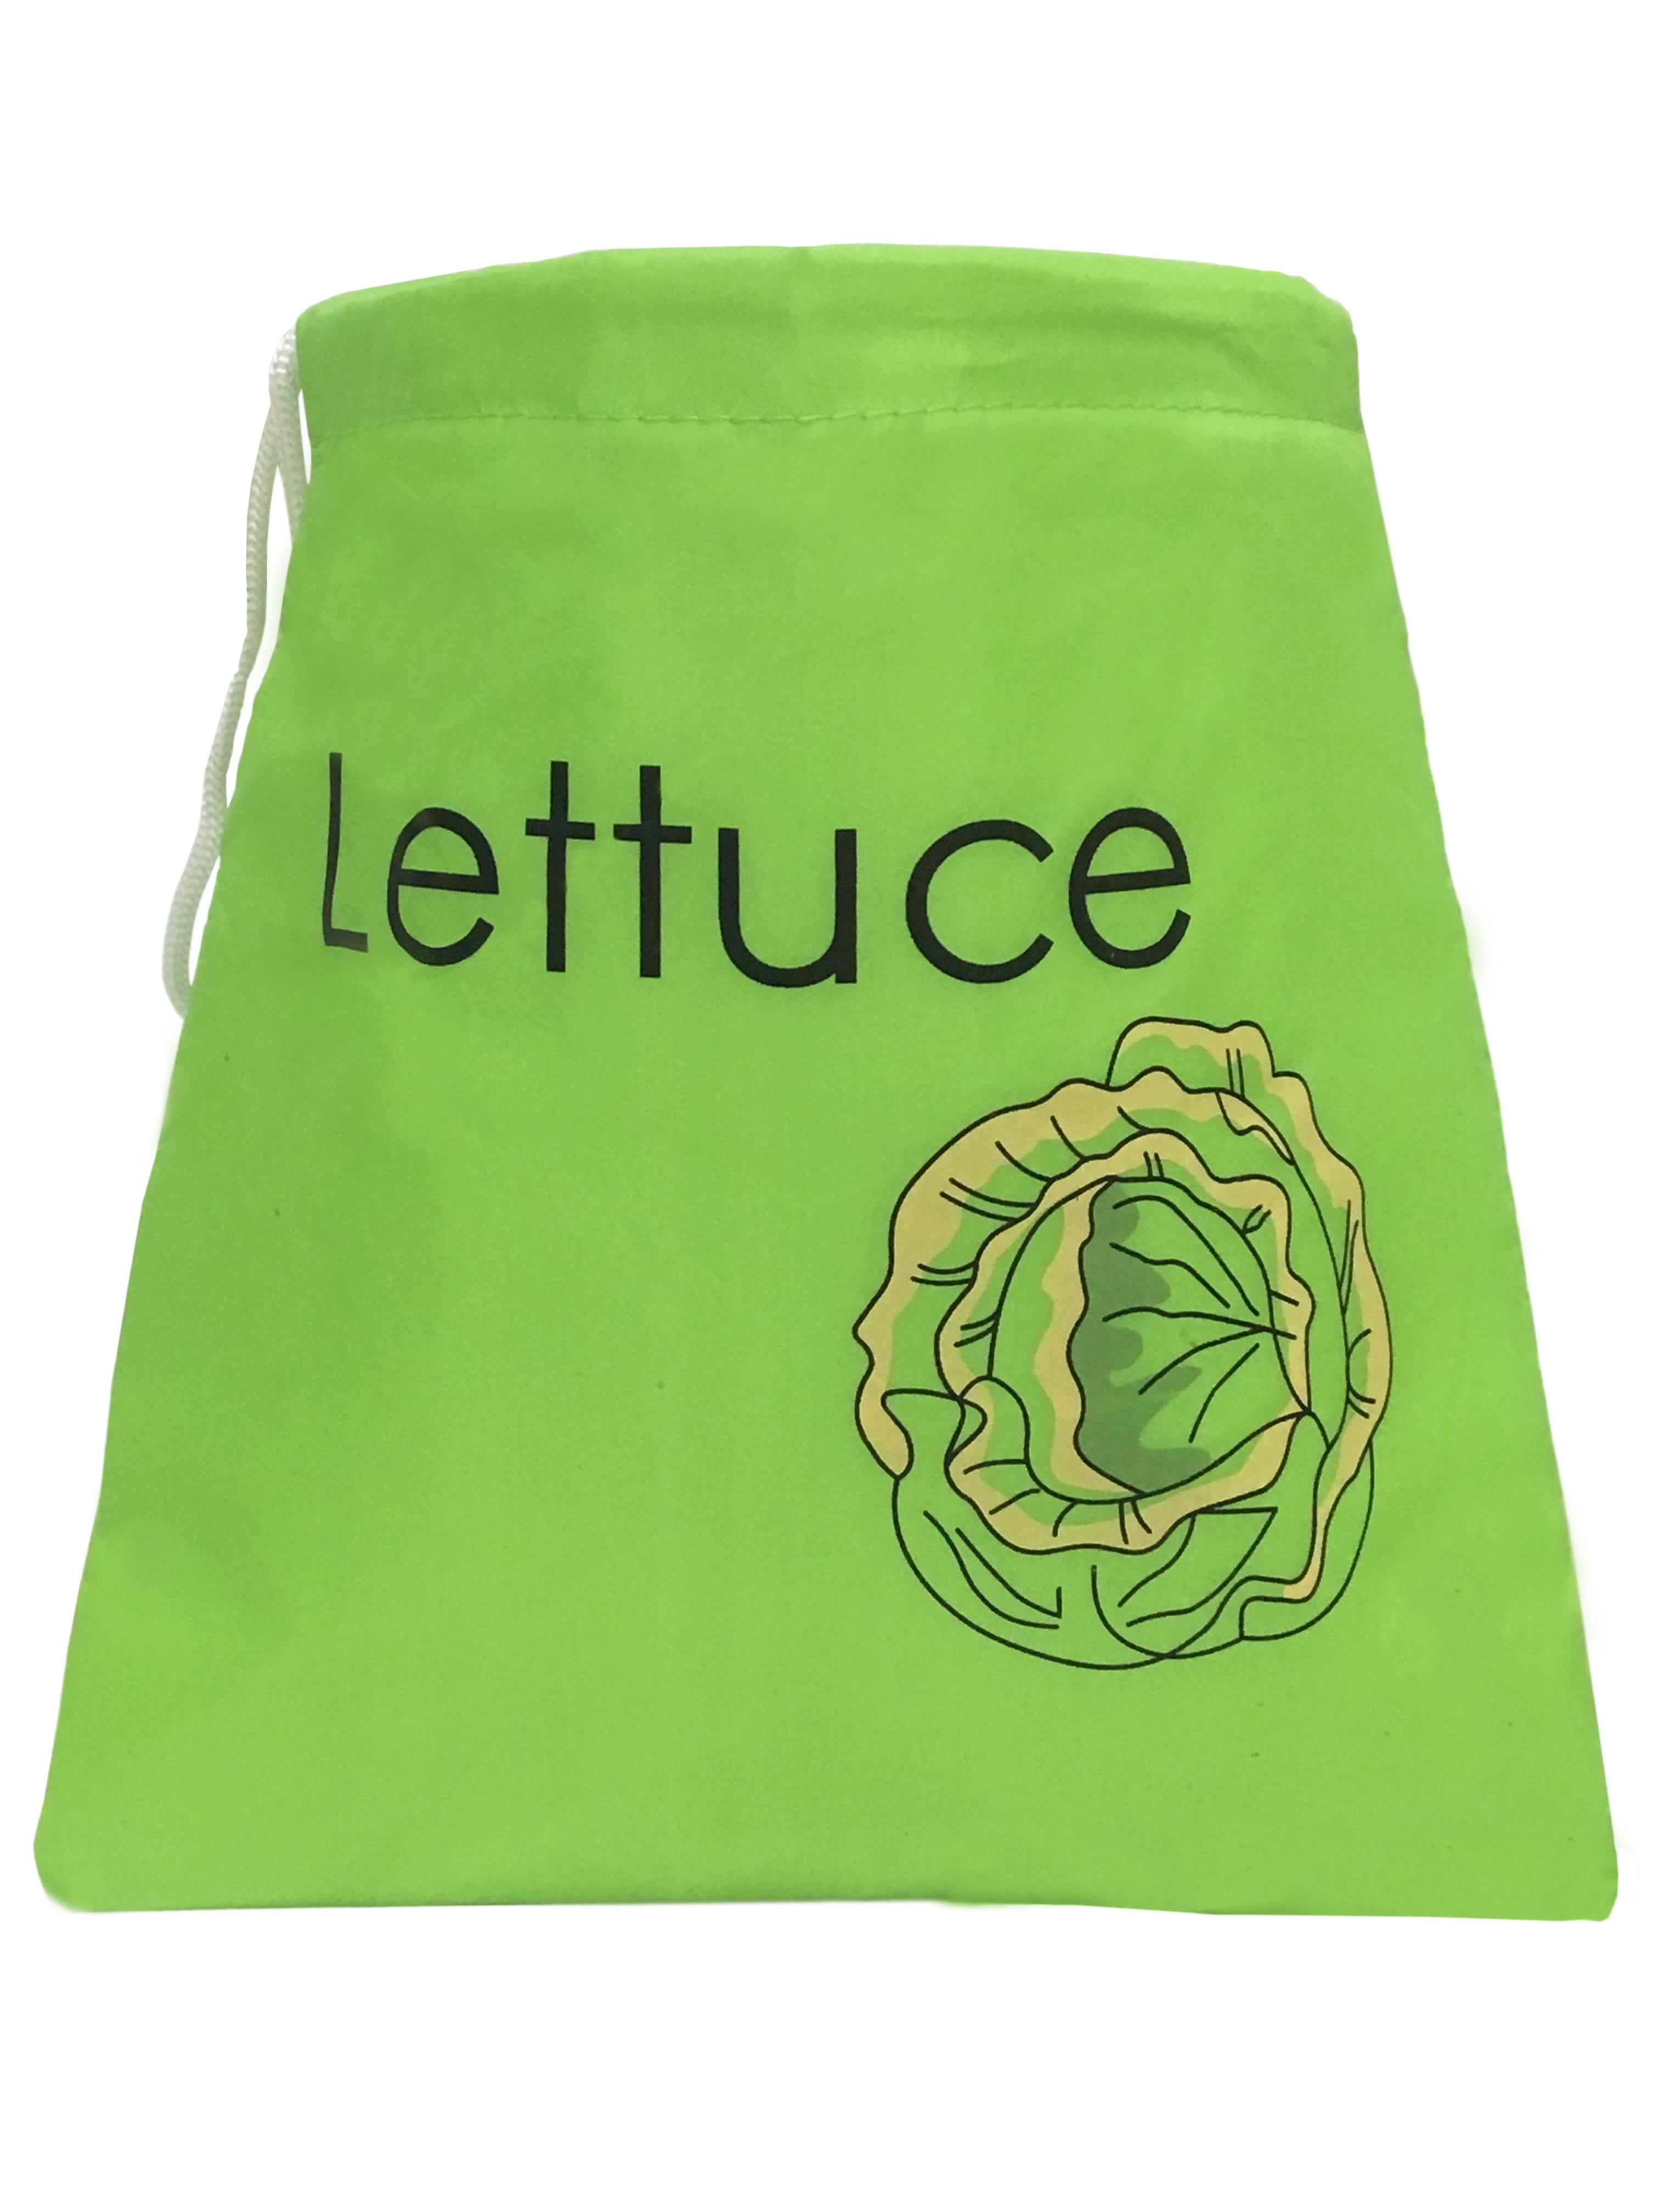 How to Sew a Lettuce Crisper Bag